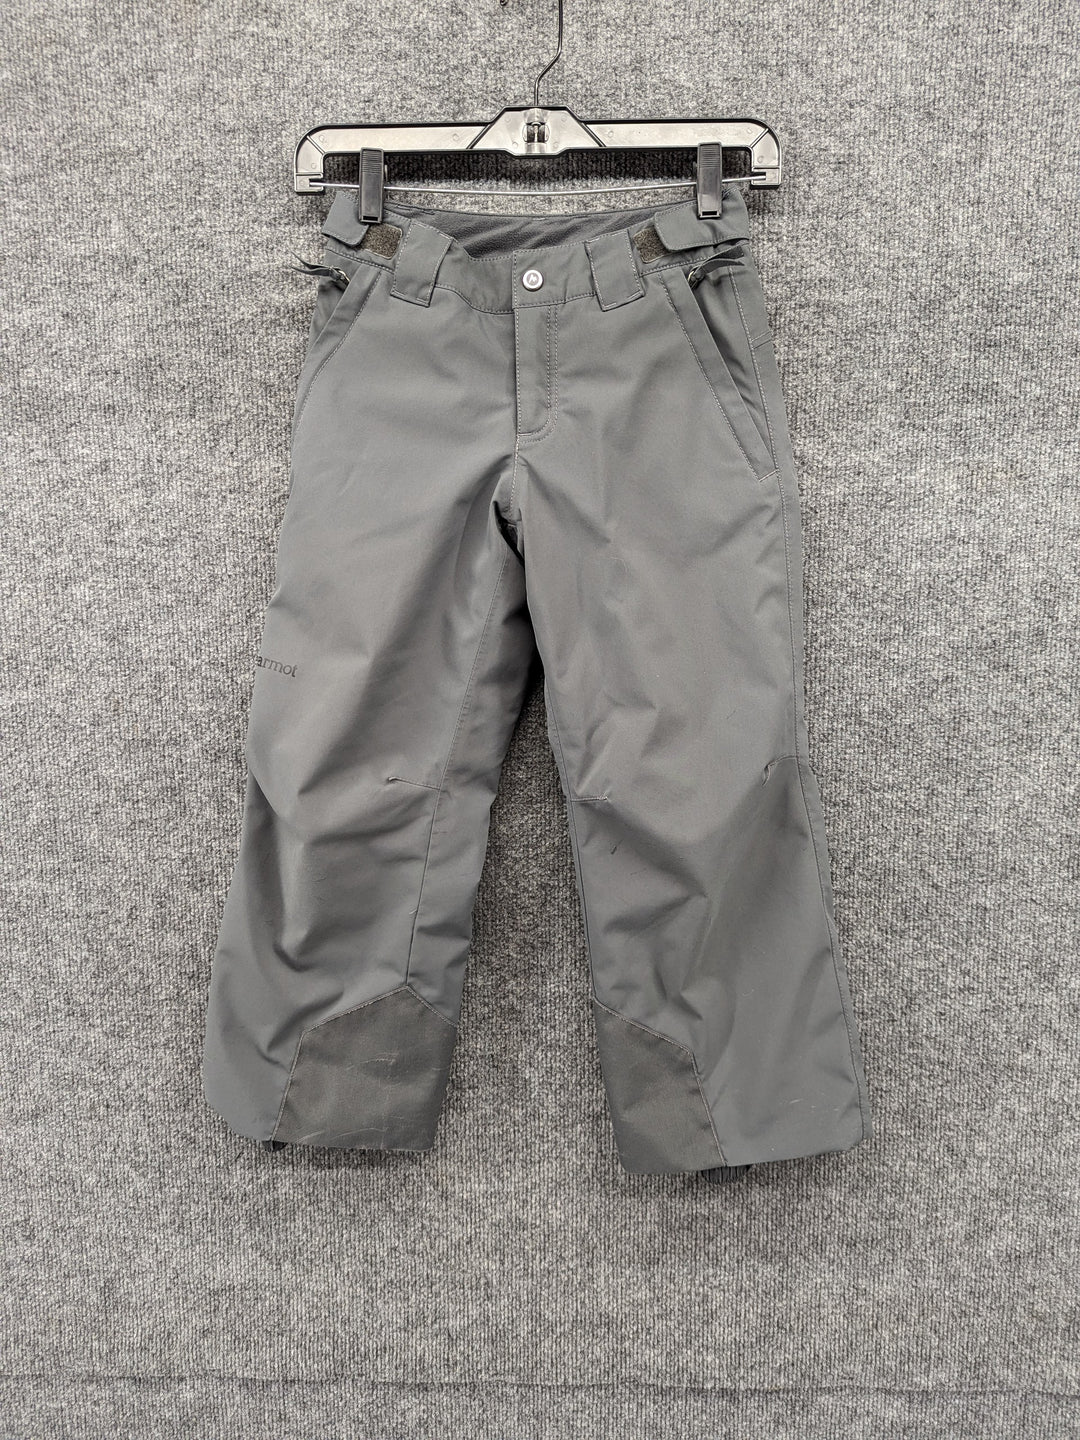 Marmot Size Y Small Youth Ski Pants – Rambleraven Gear Trader